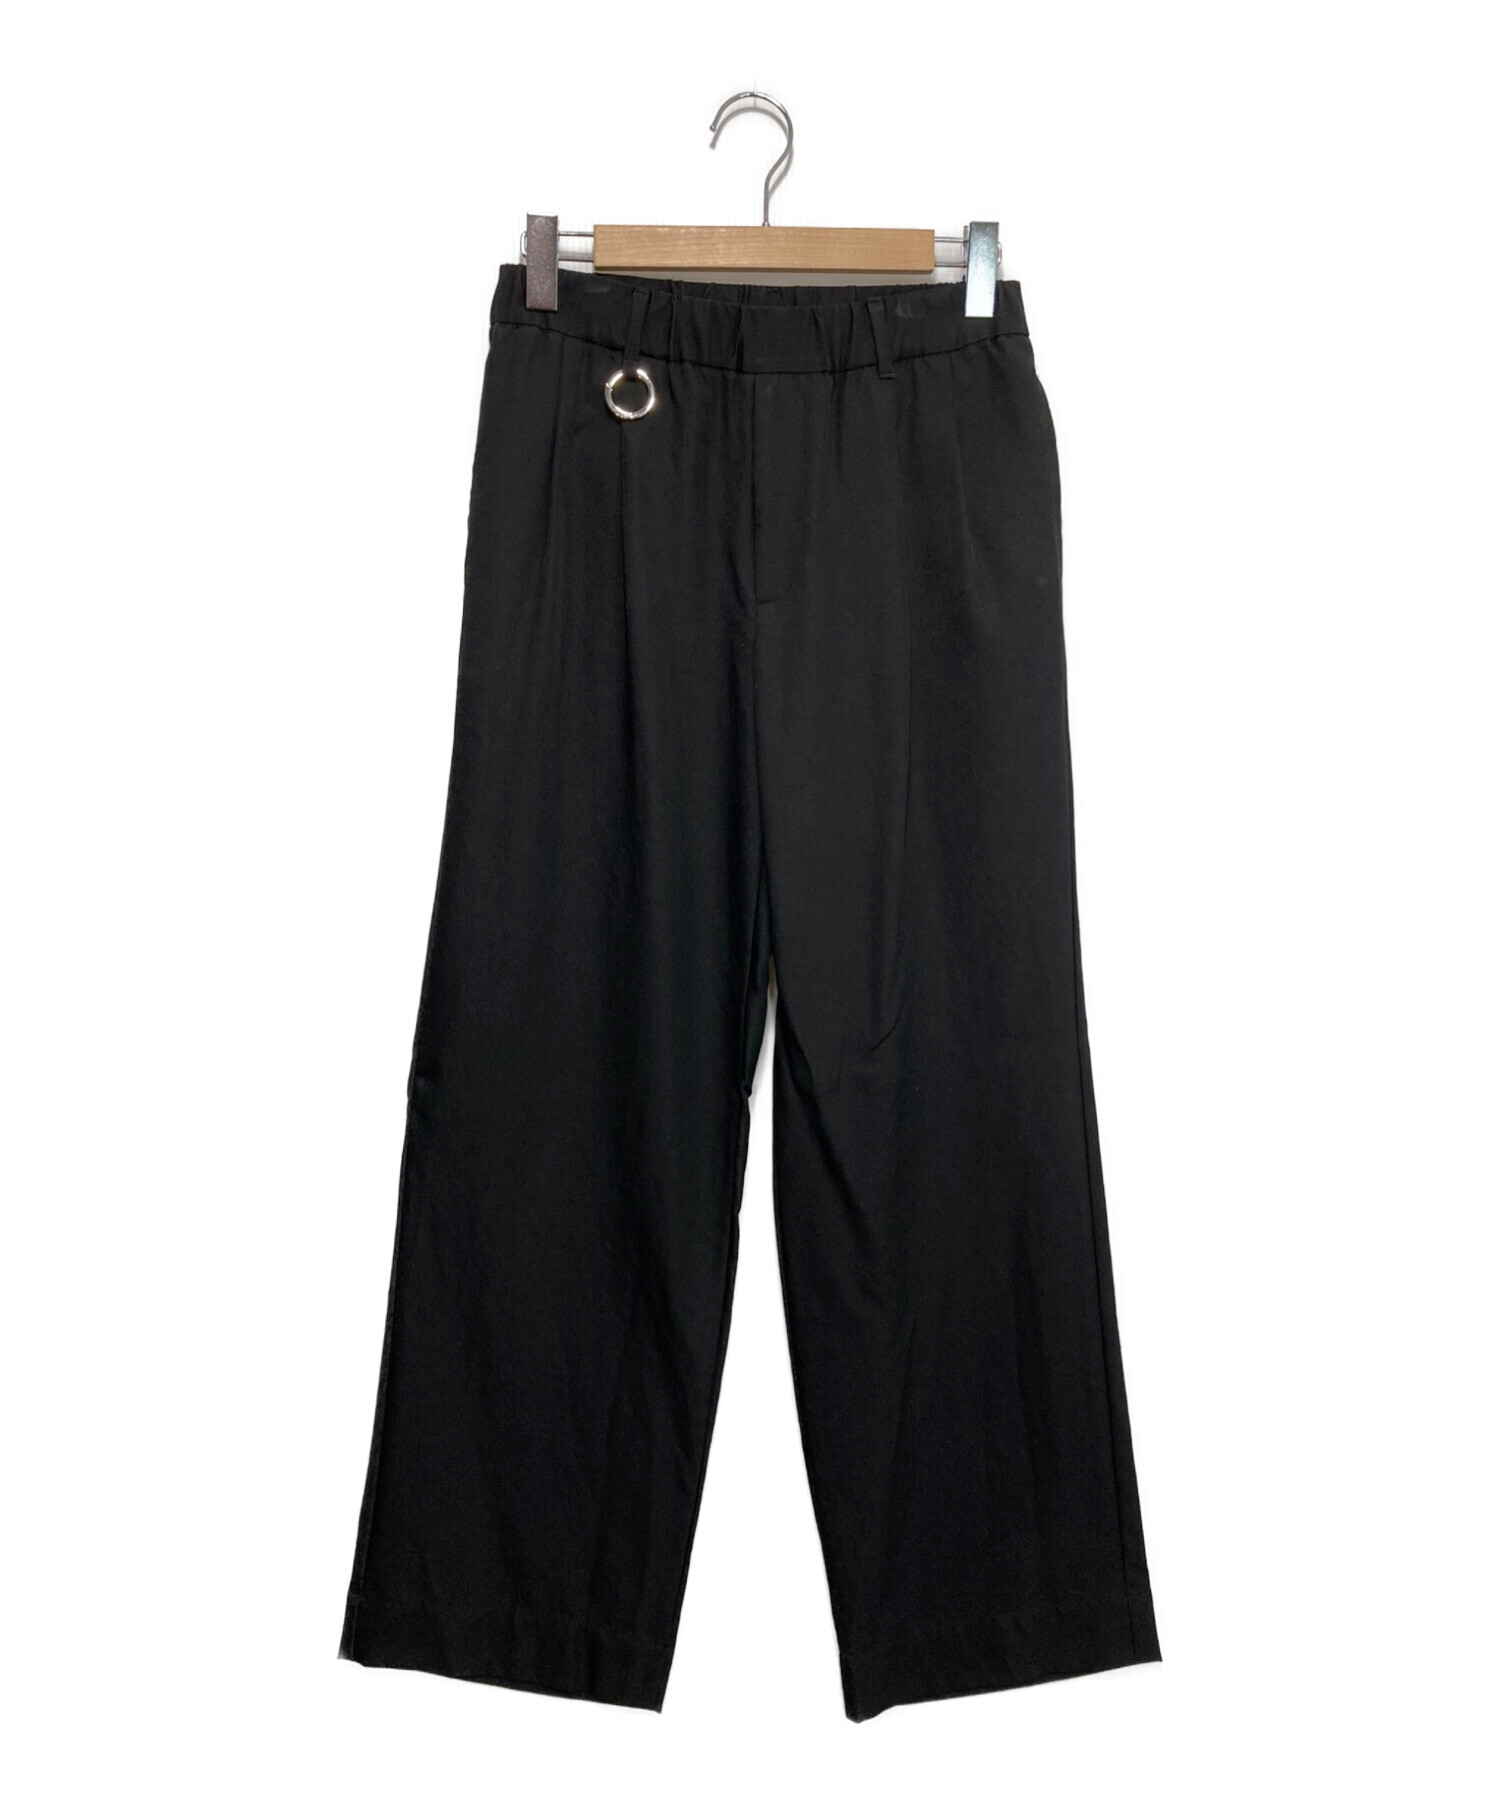 th products (ティーエイチプロダクツ) QUINN / Wide Tailored Pants ブラック サイズ:1